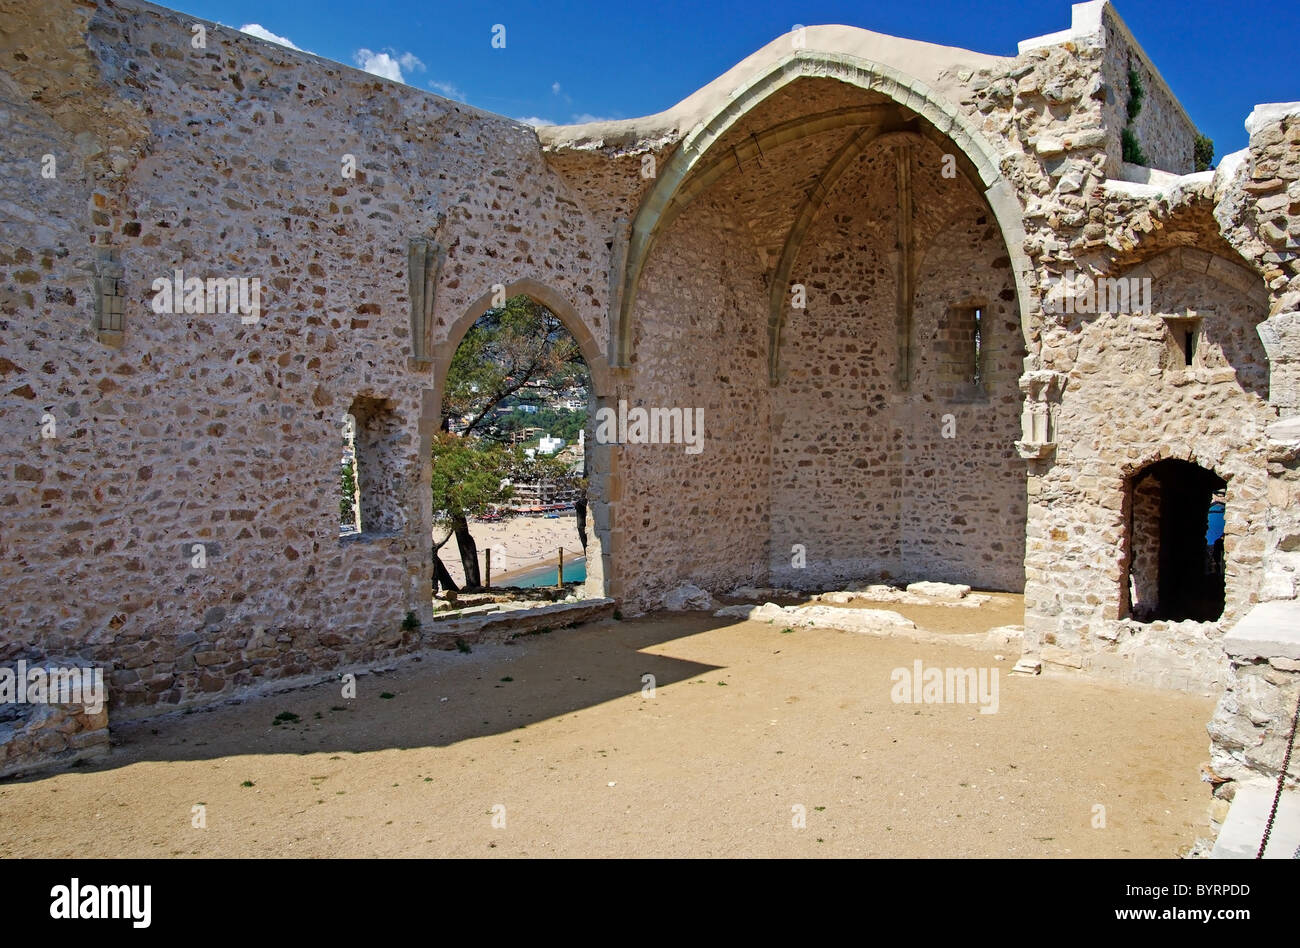 Alten ruiniert Kirche in Tossa de Mar, Costa Brava, Spanien. Stockfoto